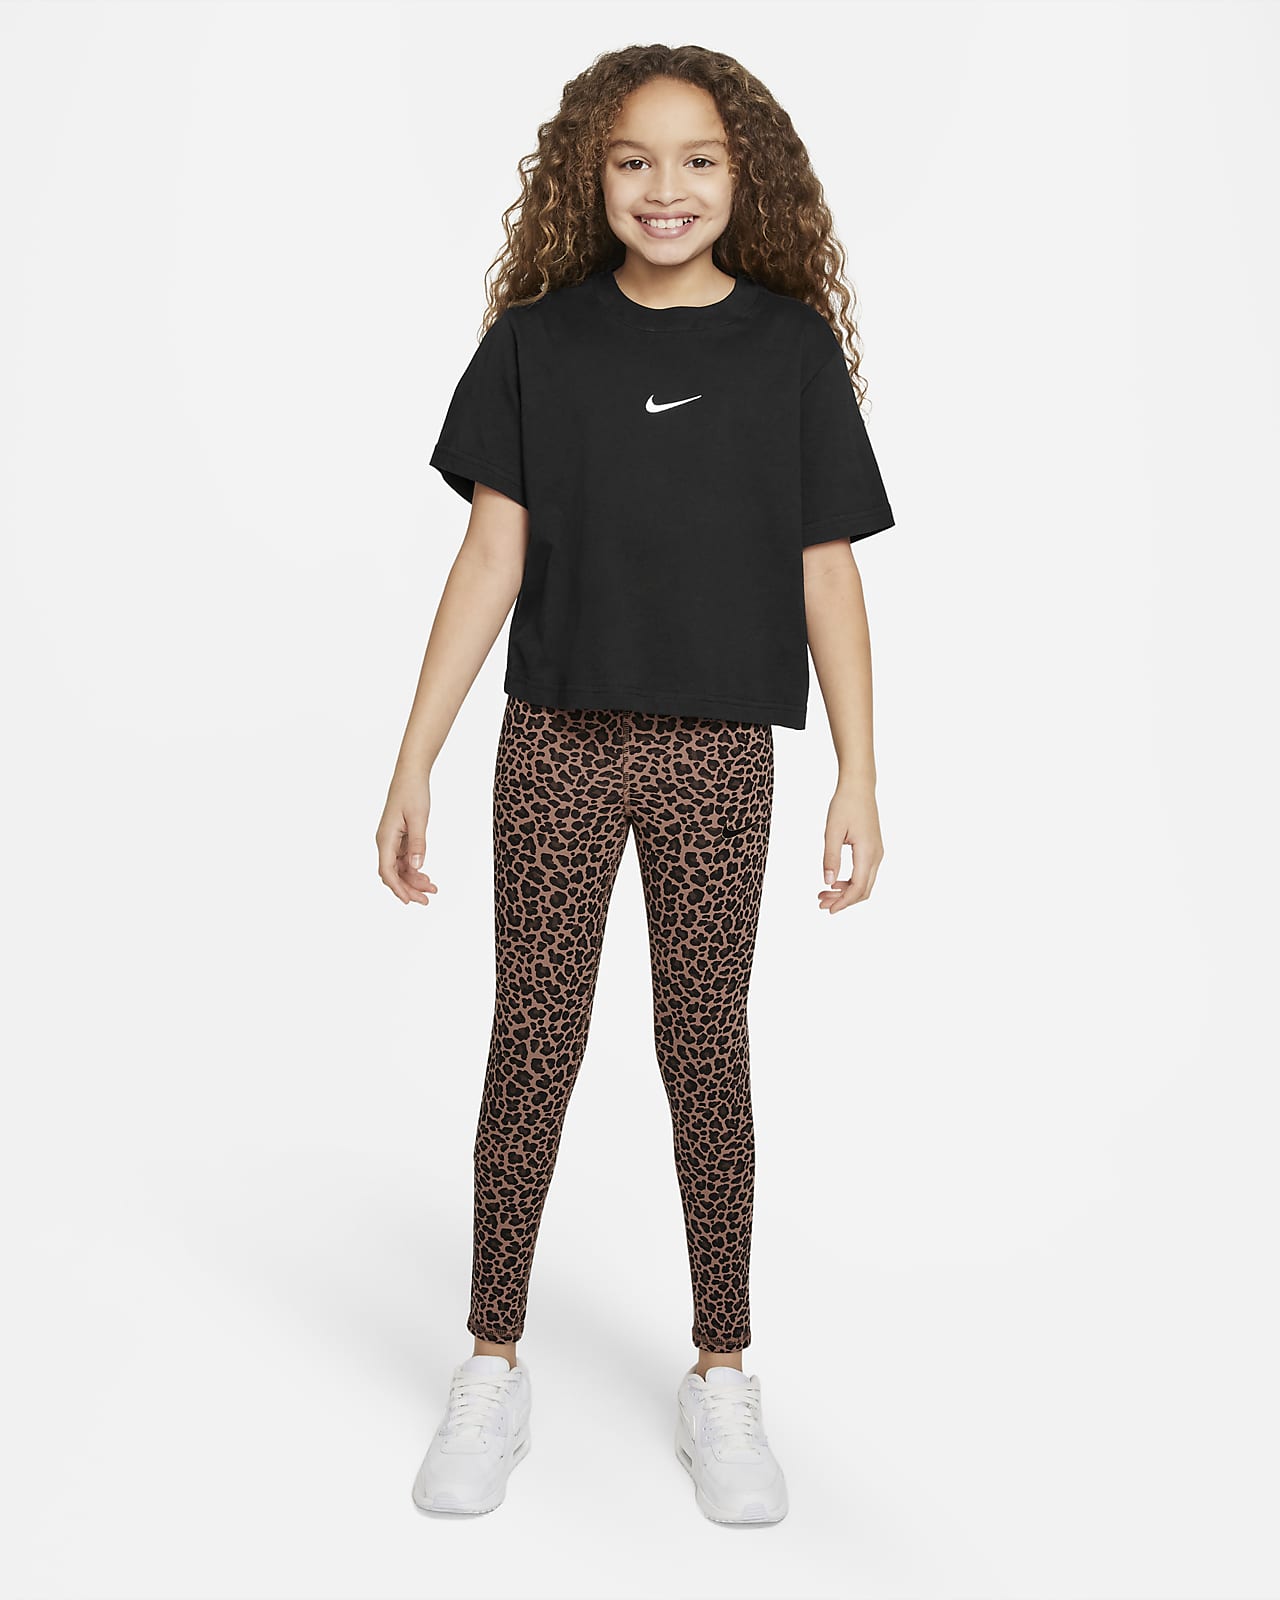 Big (Girls\') Favorites Leggings. Kids\' Nike Sportswear Printed